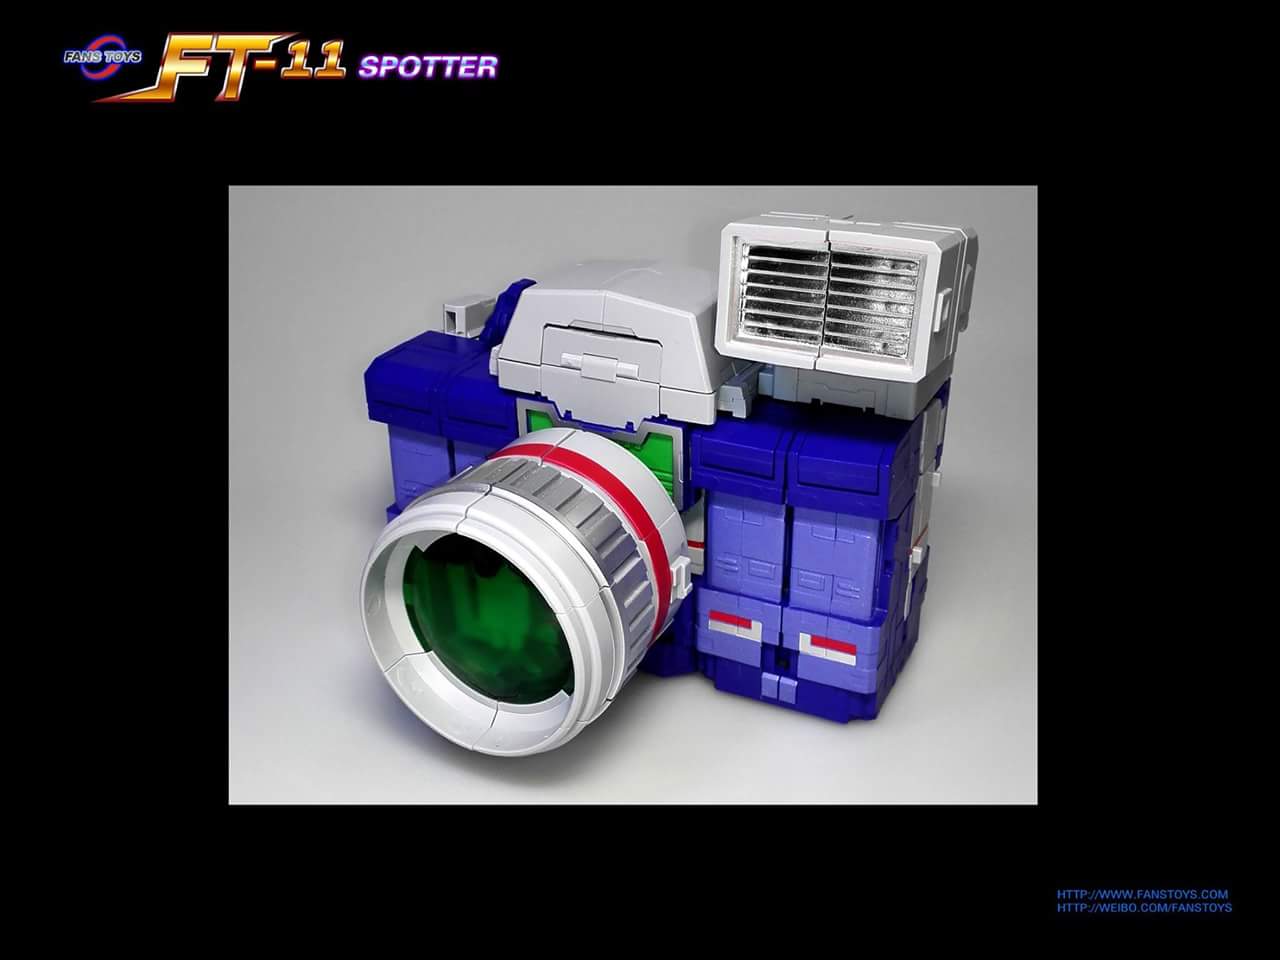 [Fanstoys] Produit Tiers - Jouet FT-11 Spotter - aka Reflector/Réflecteur MD1iulnA